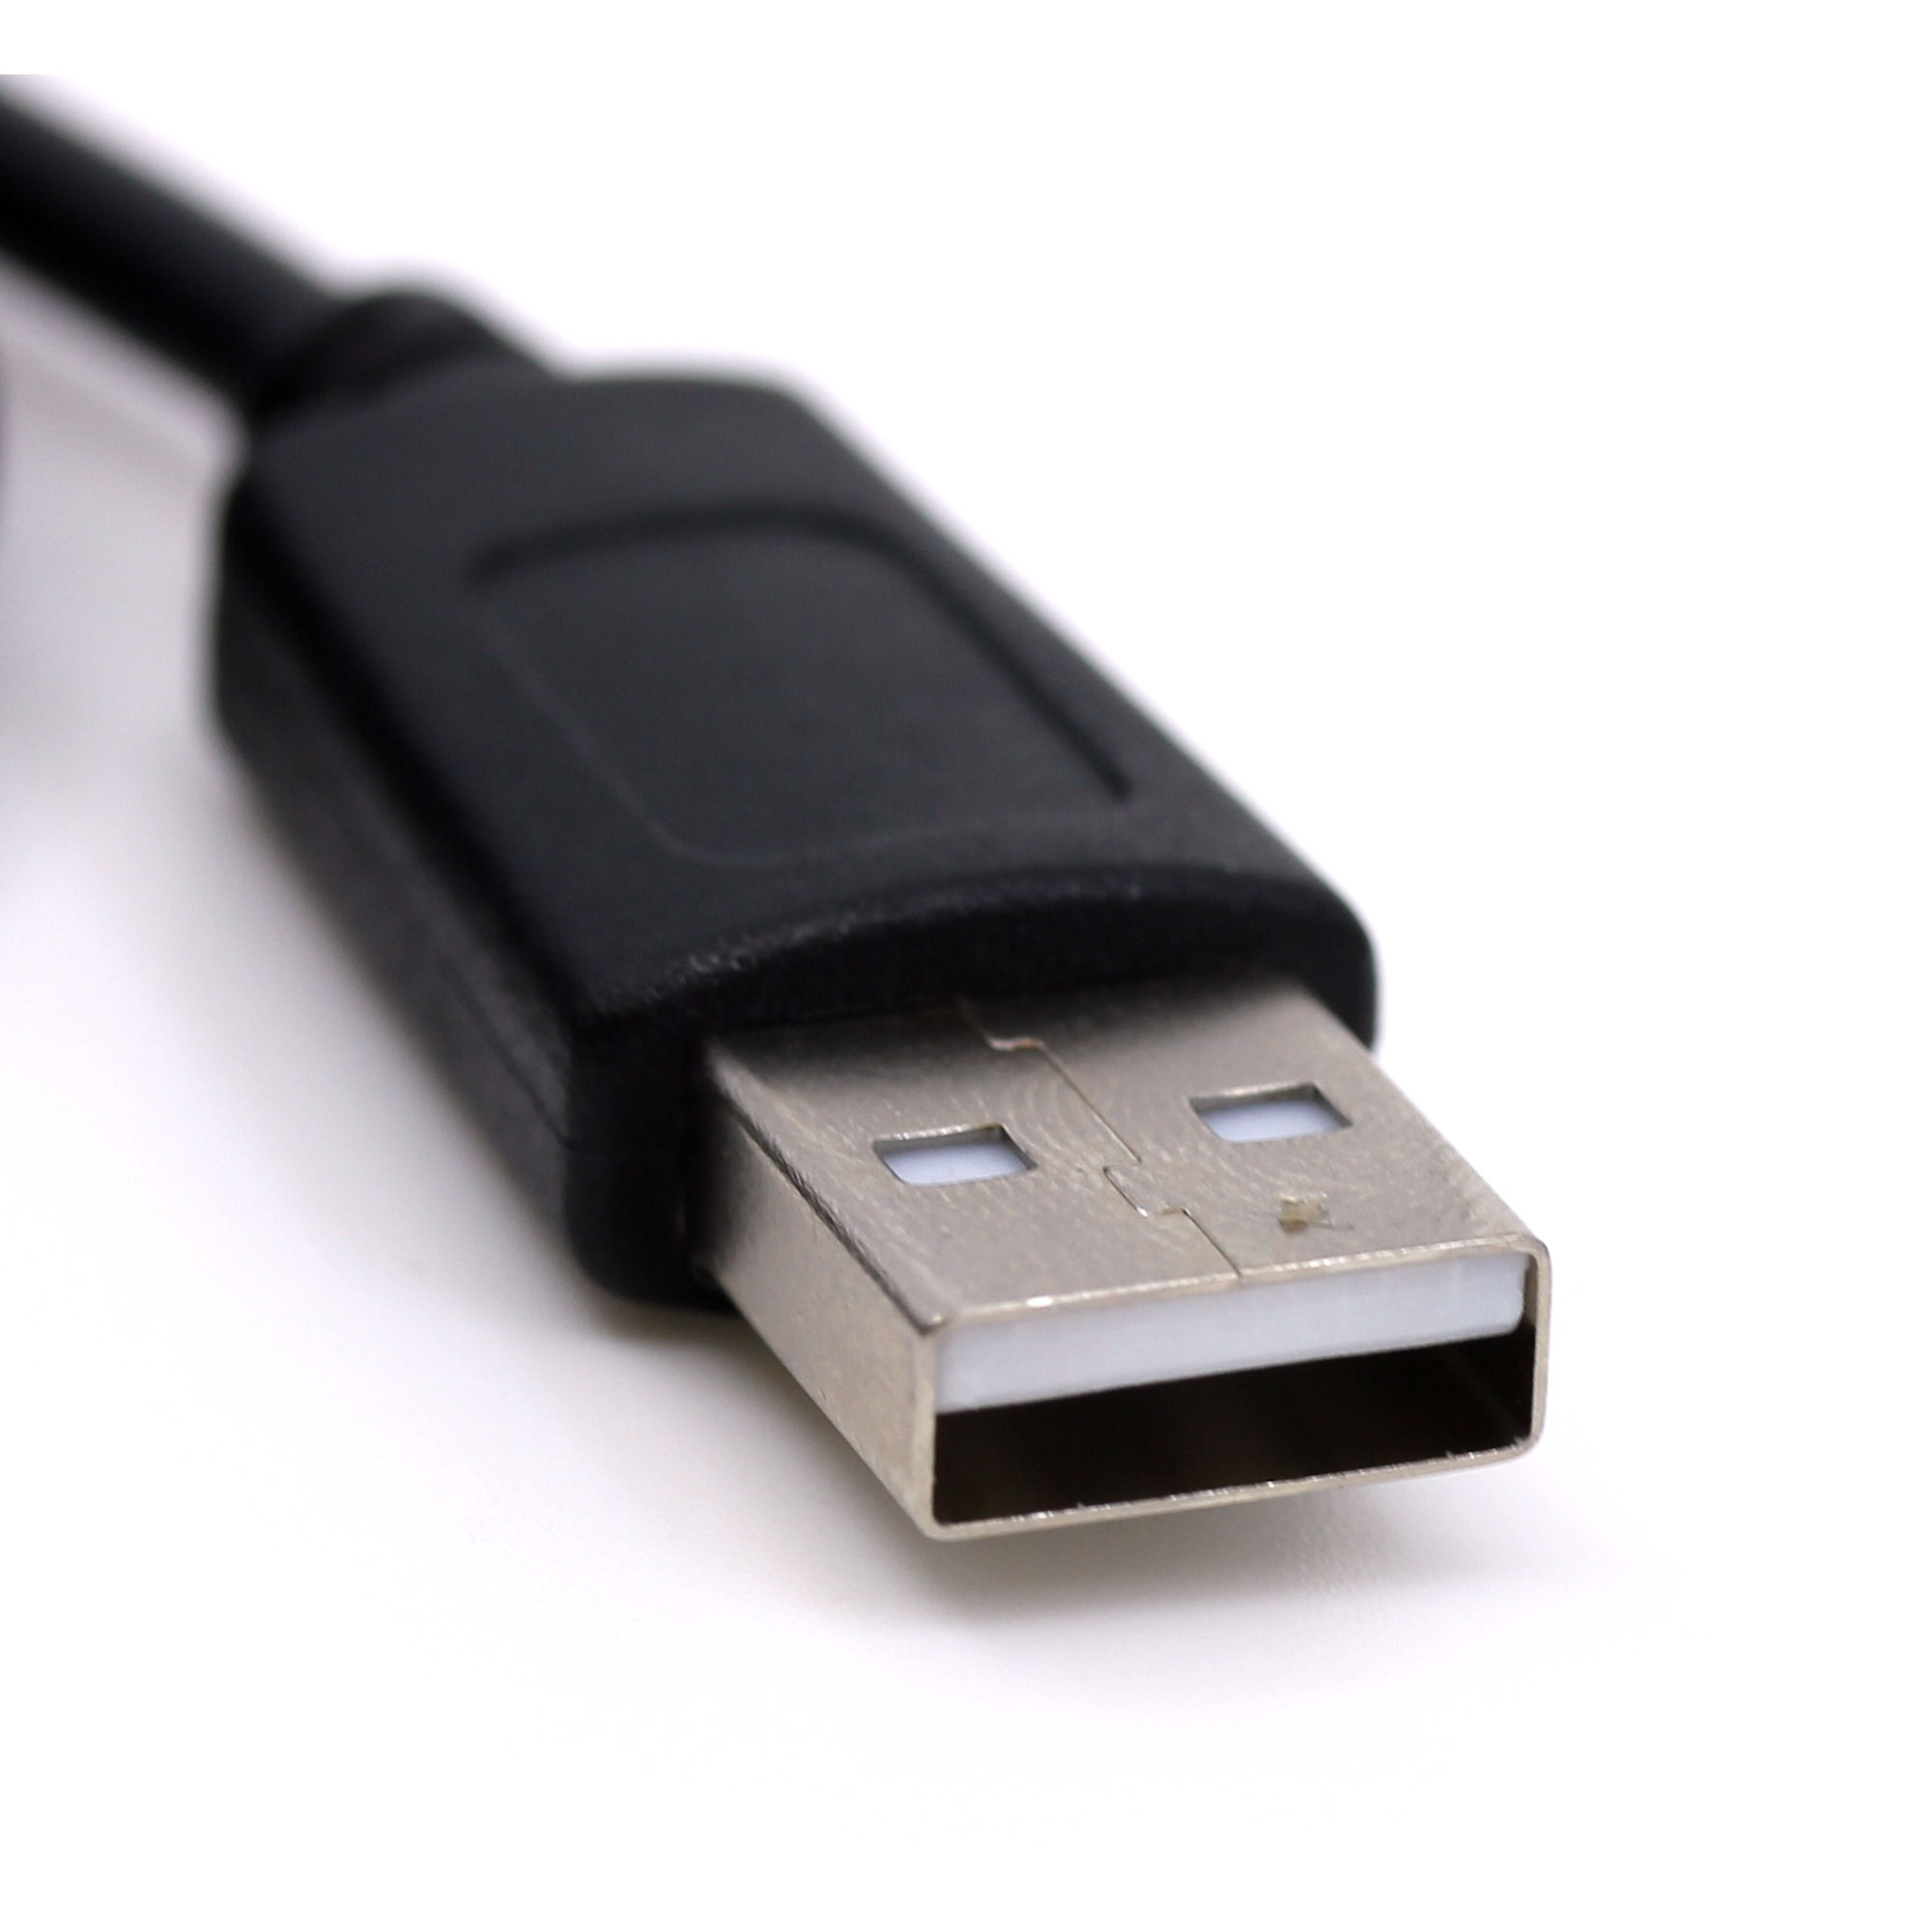 USB Daten-/Ladekabel für Kindle Fire HD (6, 7, 8, 8.9) Fire HDX (7, 8.9), Paperwhite, Voyage